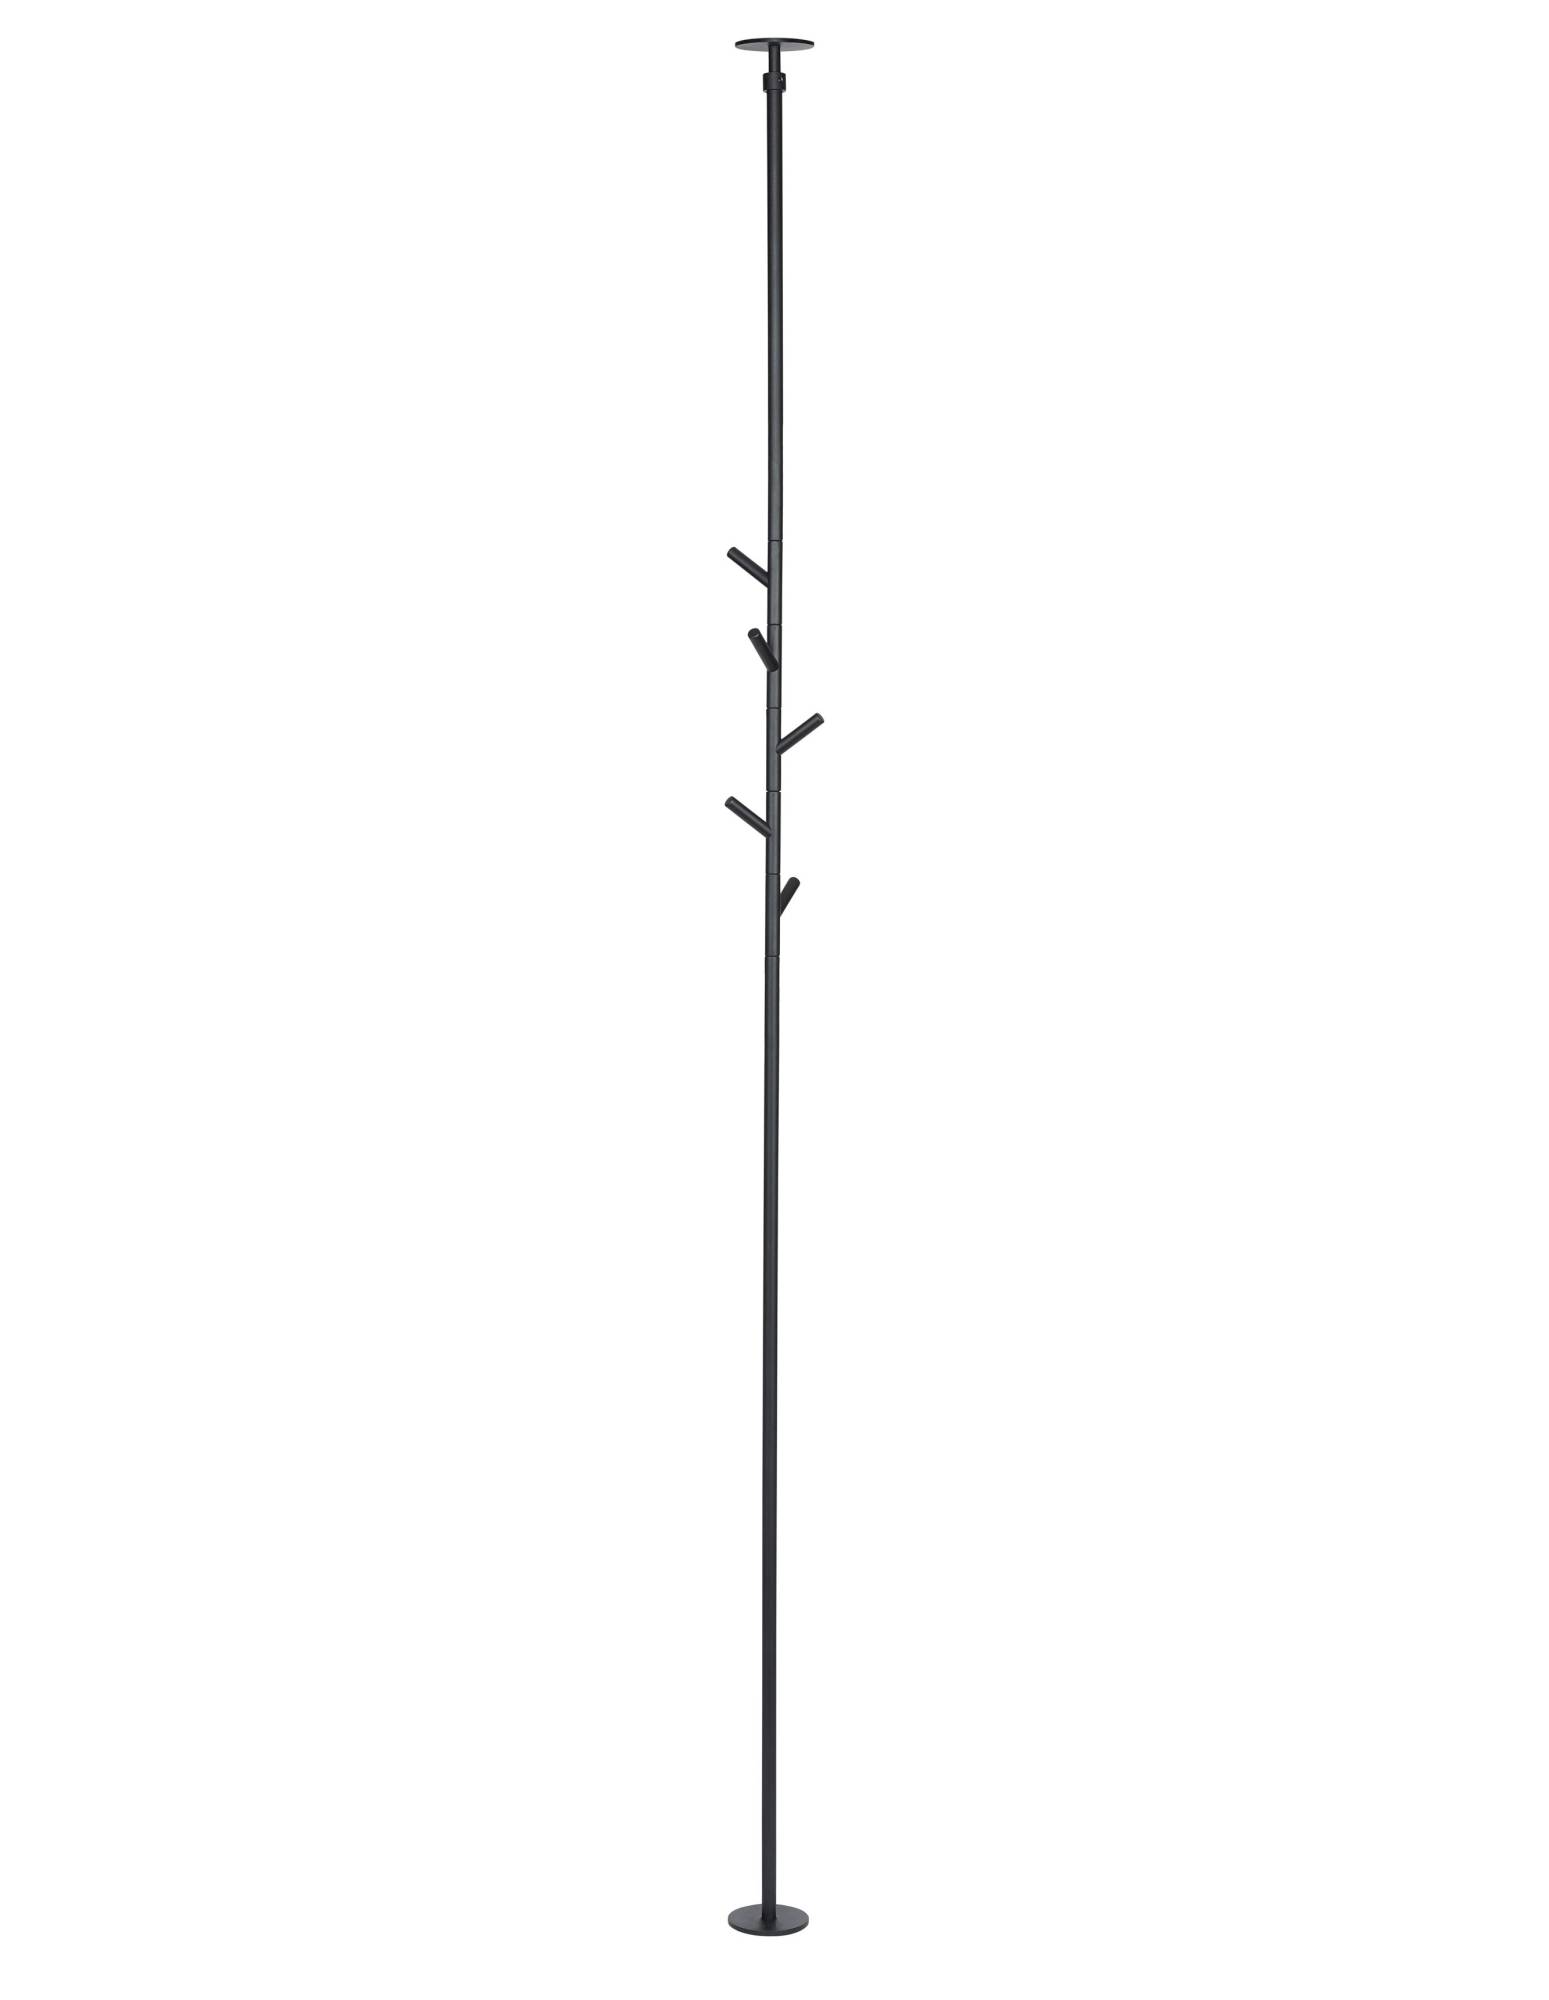 SUMI Spanngarderobe 230 - 260 cm Deckenhöhe, 5 Haken